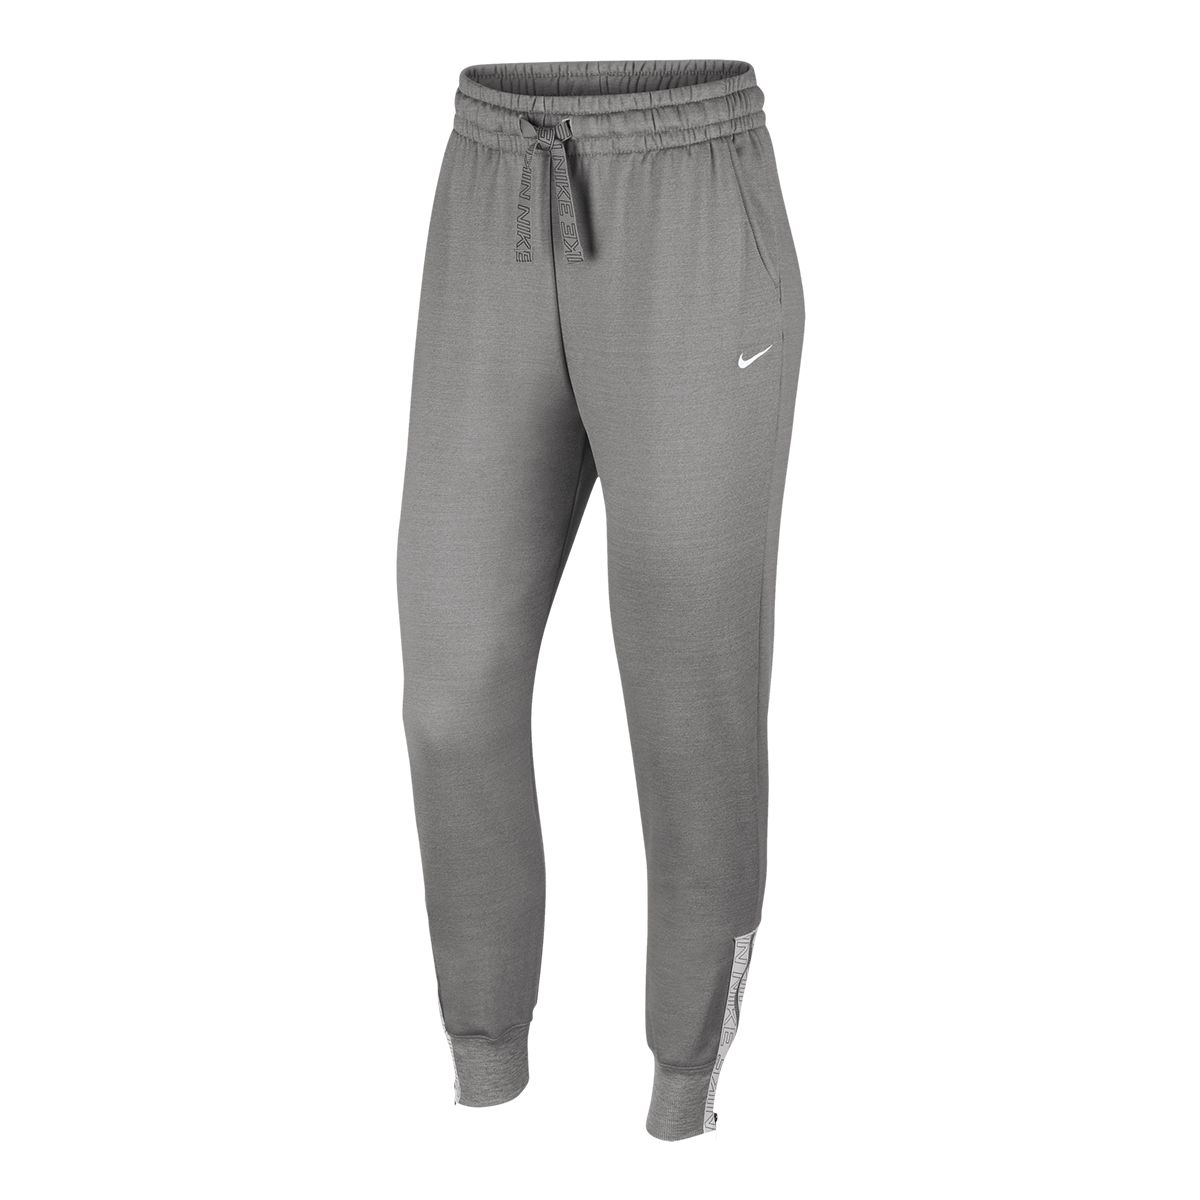 Nike Women's Pro Hyperwarm Training Tights (Particle Grey, Medium) 